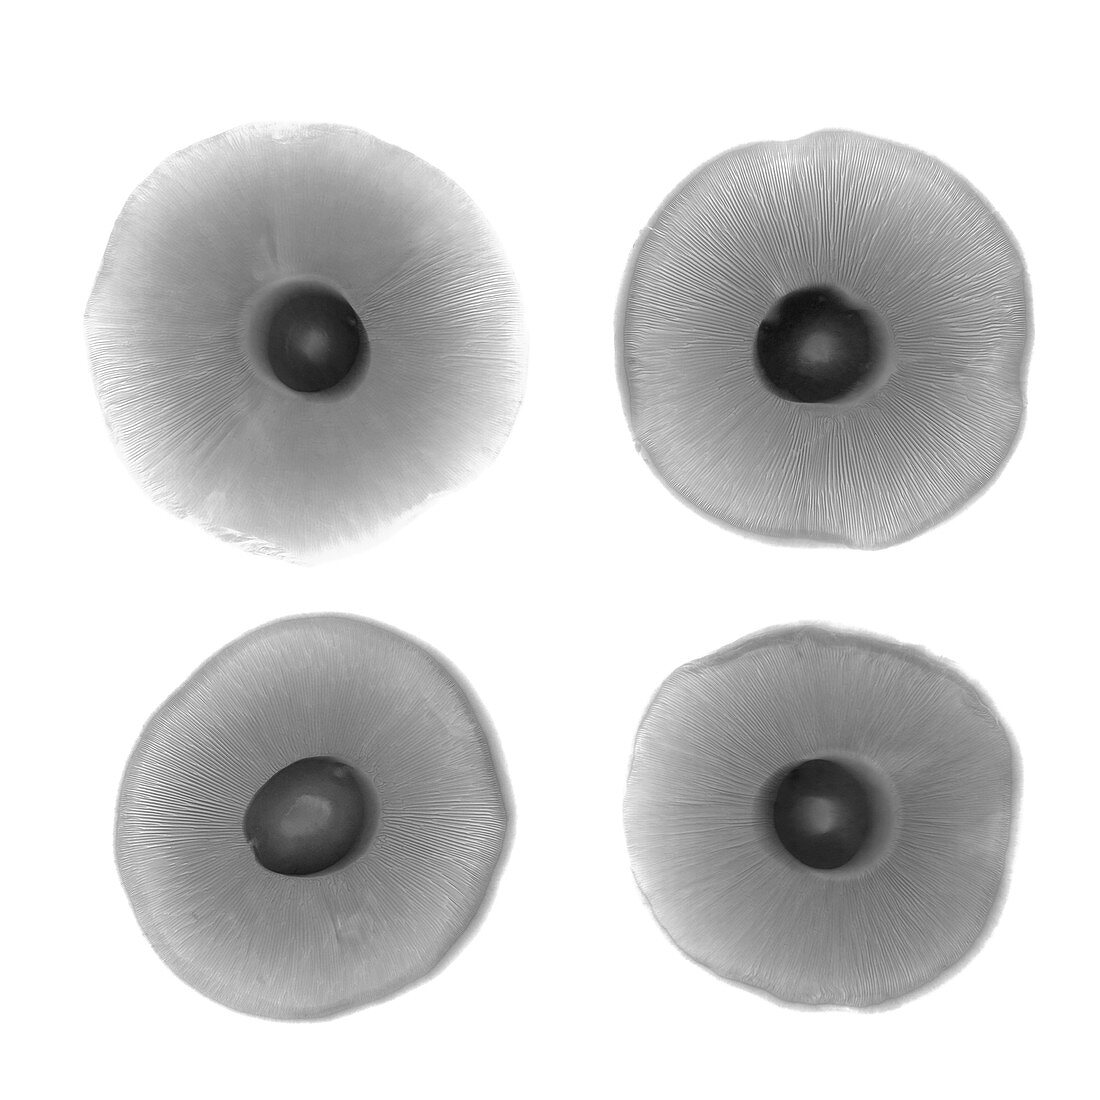 Four mushrooms, X-ray